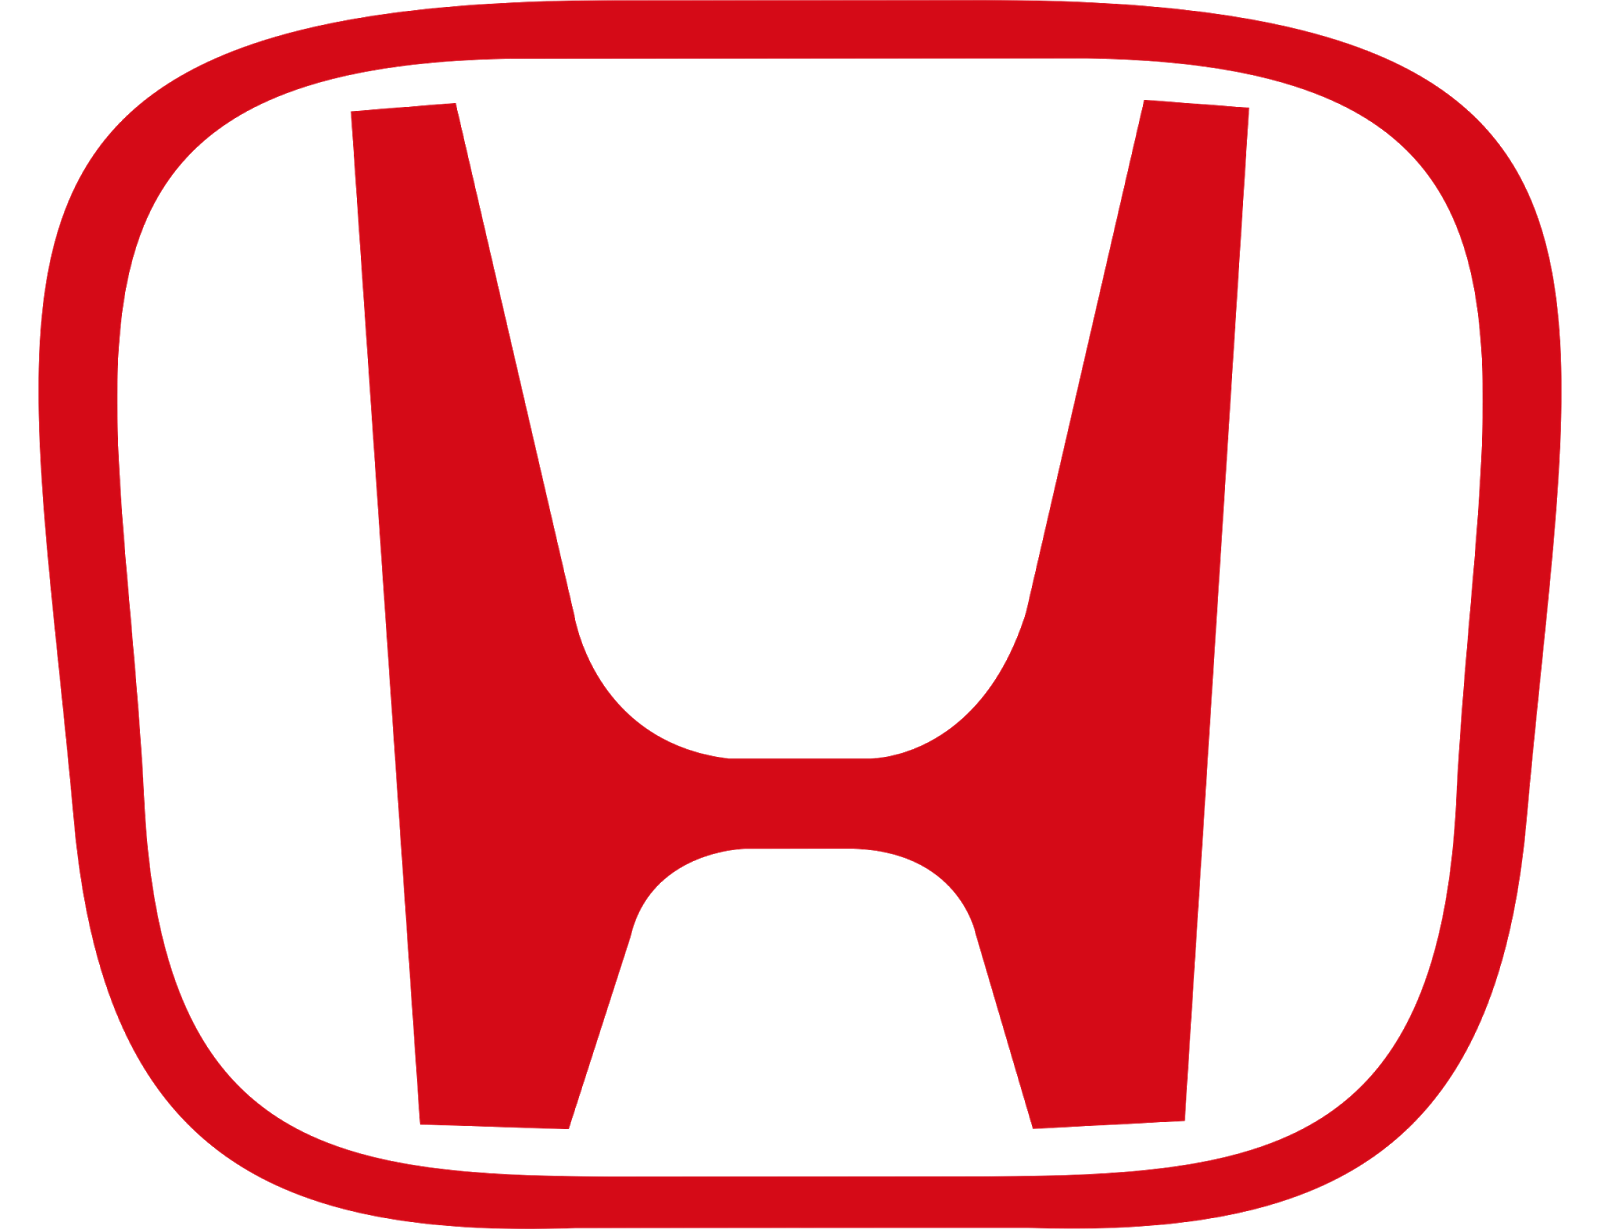 Honda H Logo - Honda h logo Icon and PNG Background